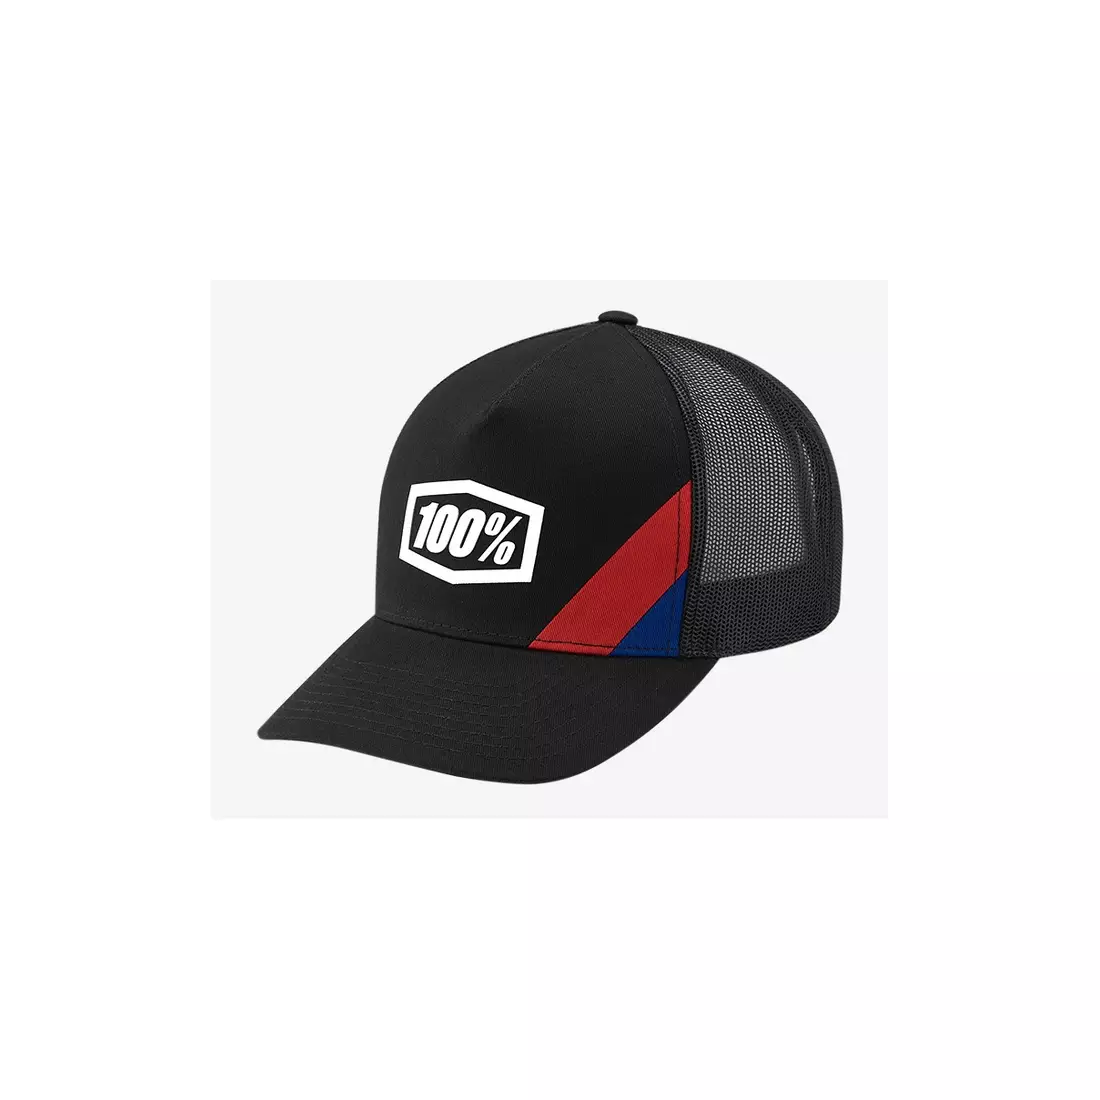 100% șapcă de baseball CORNERSTONE X-Fit black STO-20070-001-01